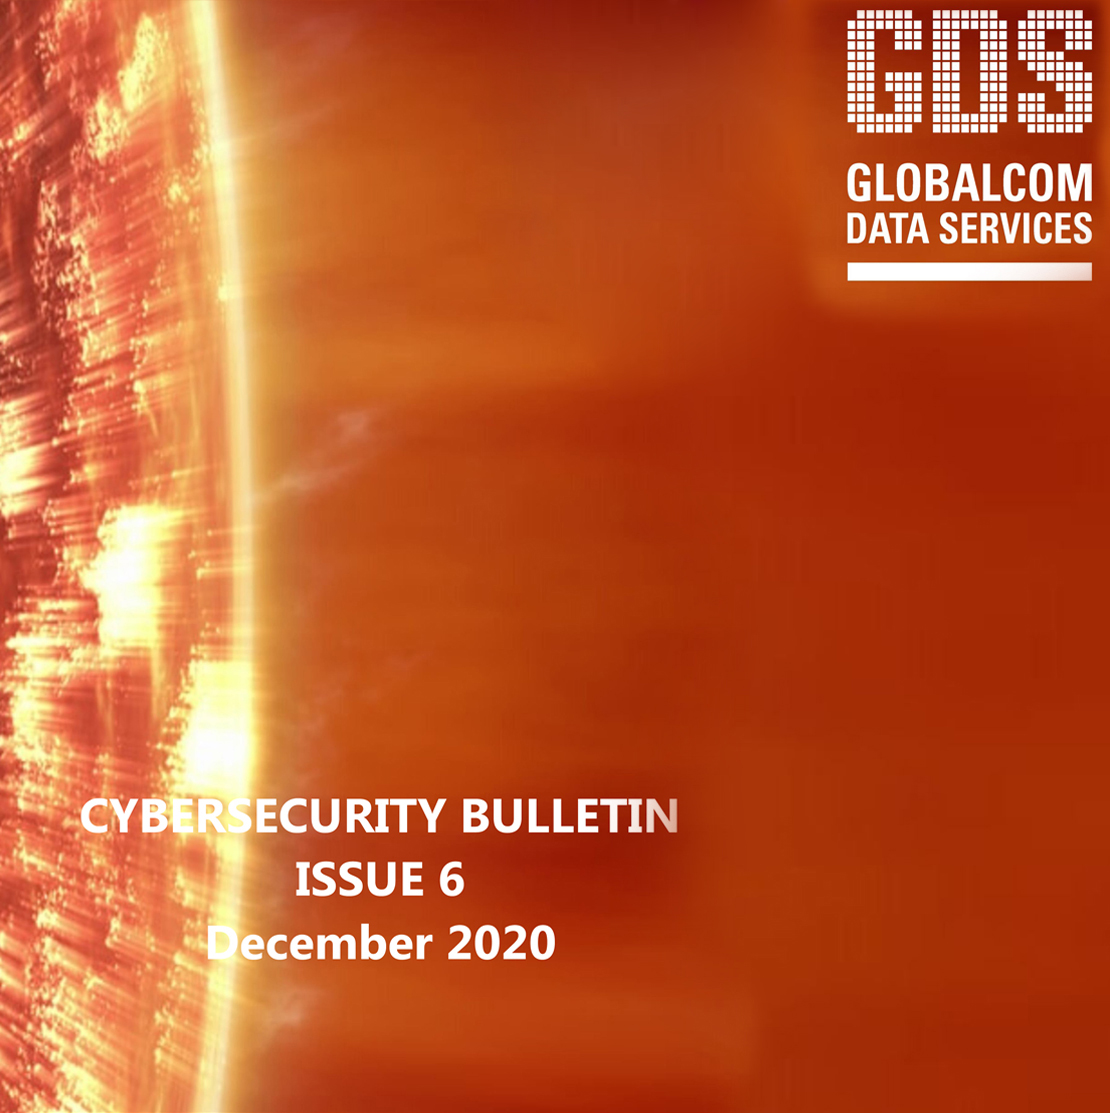 Cybersecurity bulletin - ed 5 - November 2020